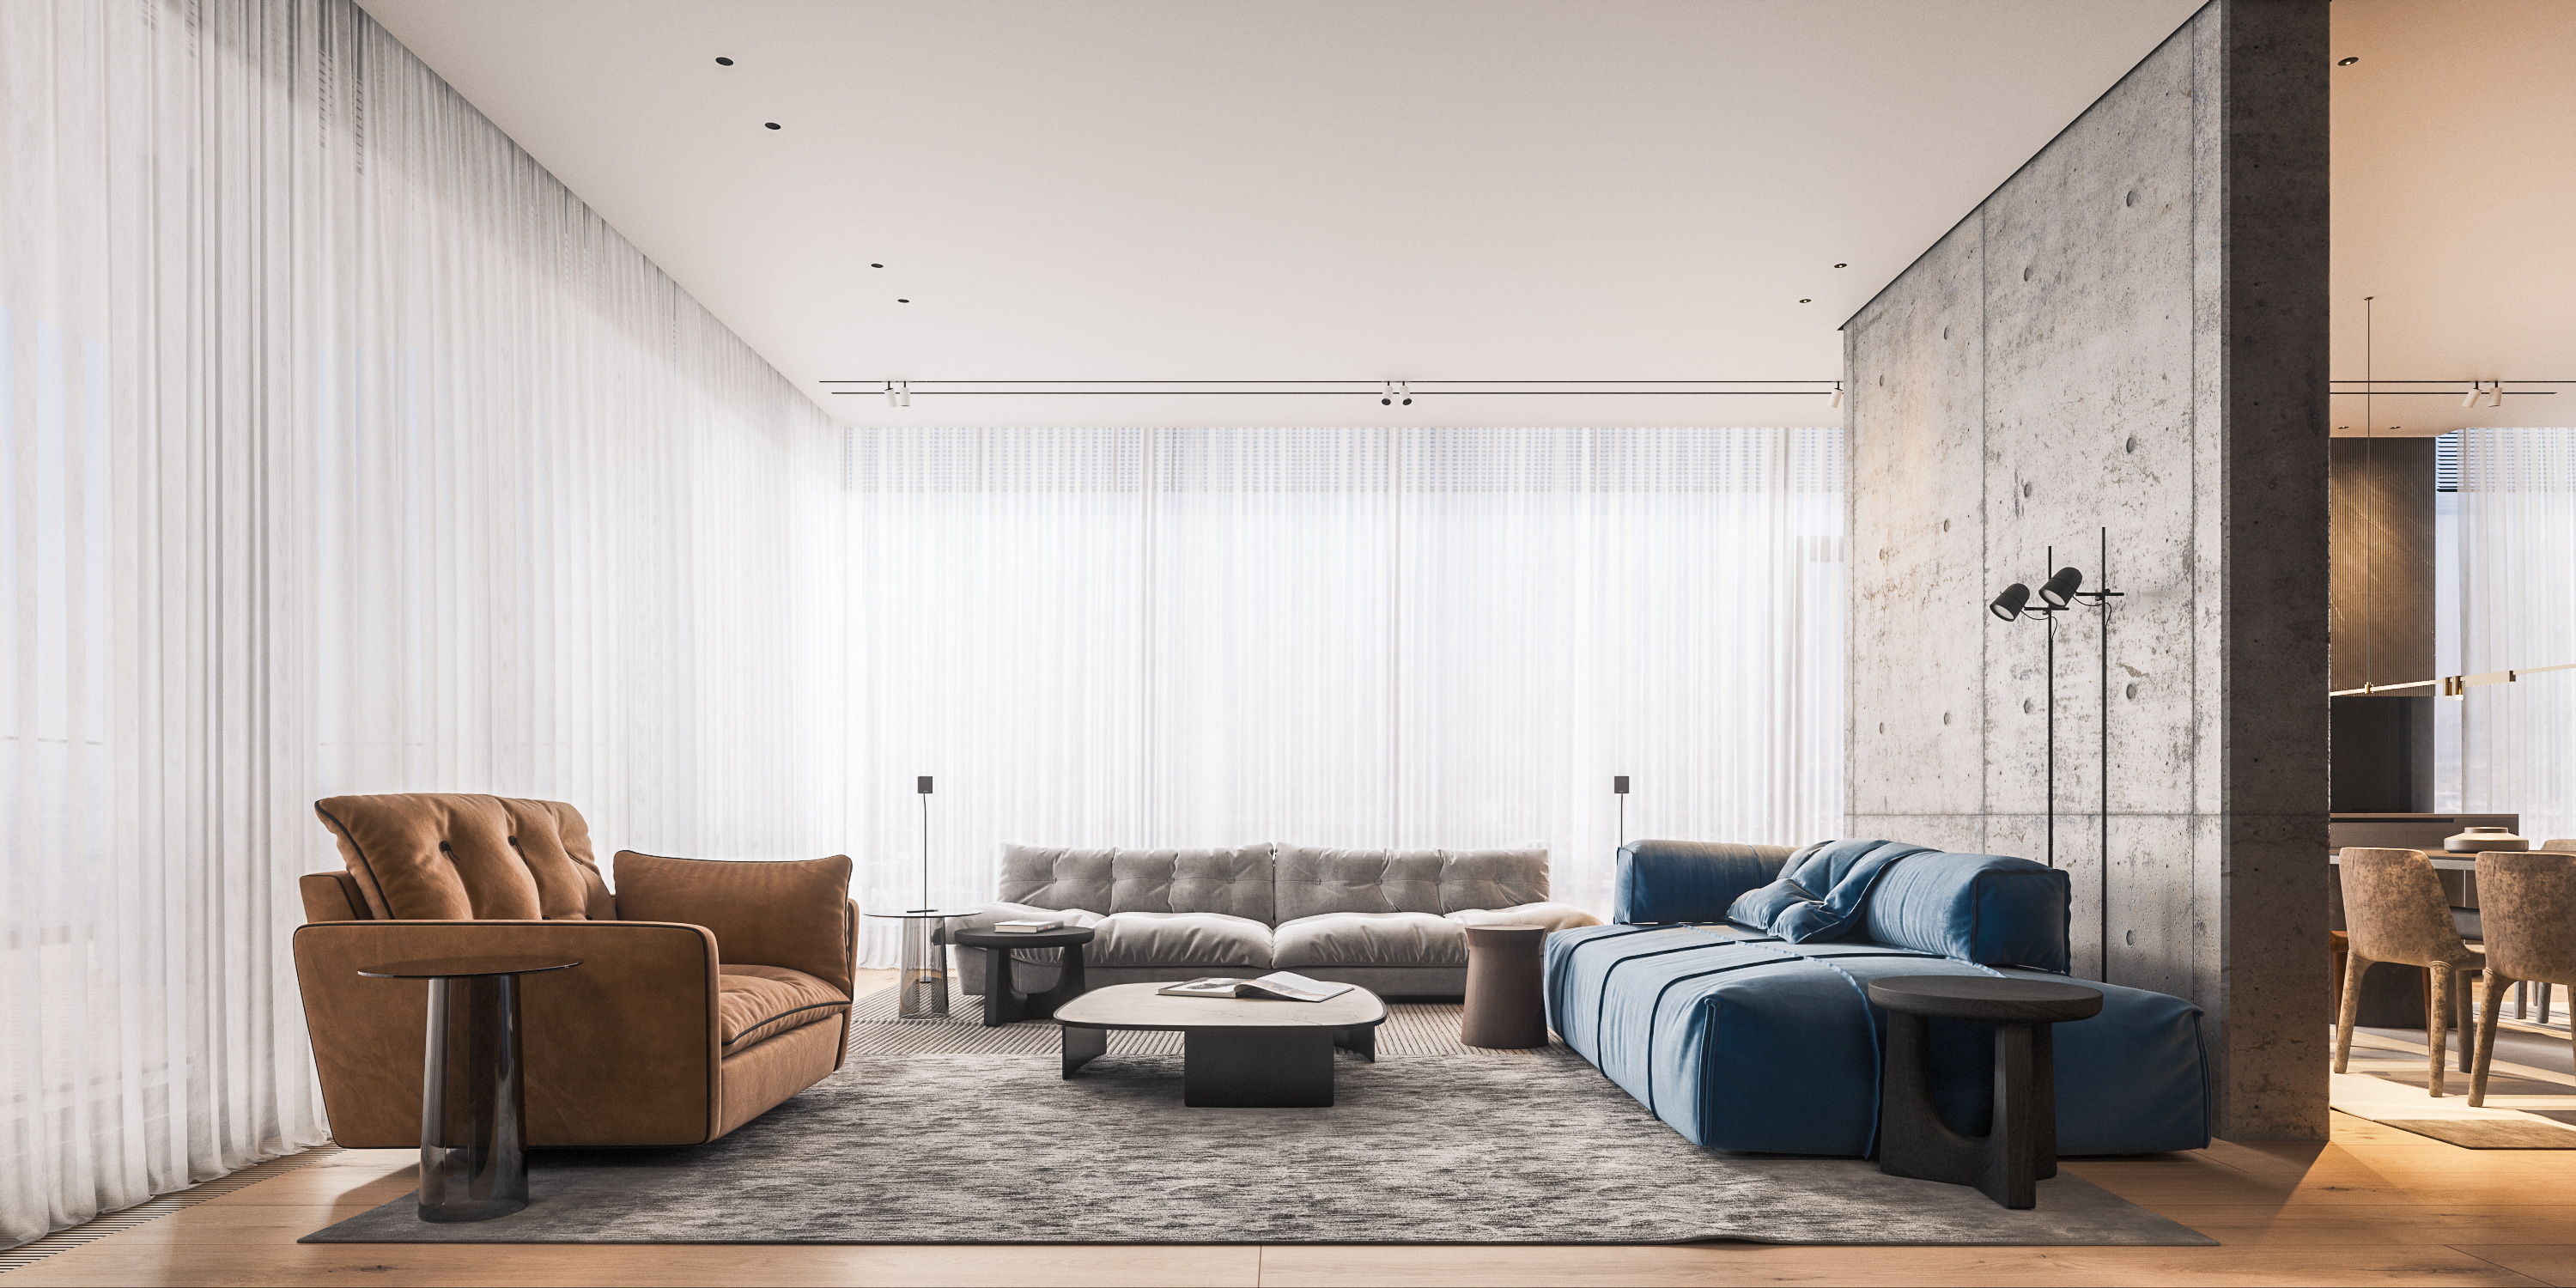 Bucharest Penthouse Interior Design - Modern Minimalist Living Room - Hype Project - arh. Adrian Ianculescu (1)